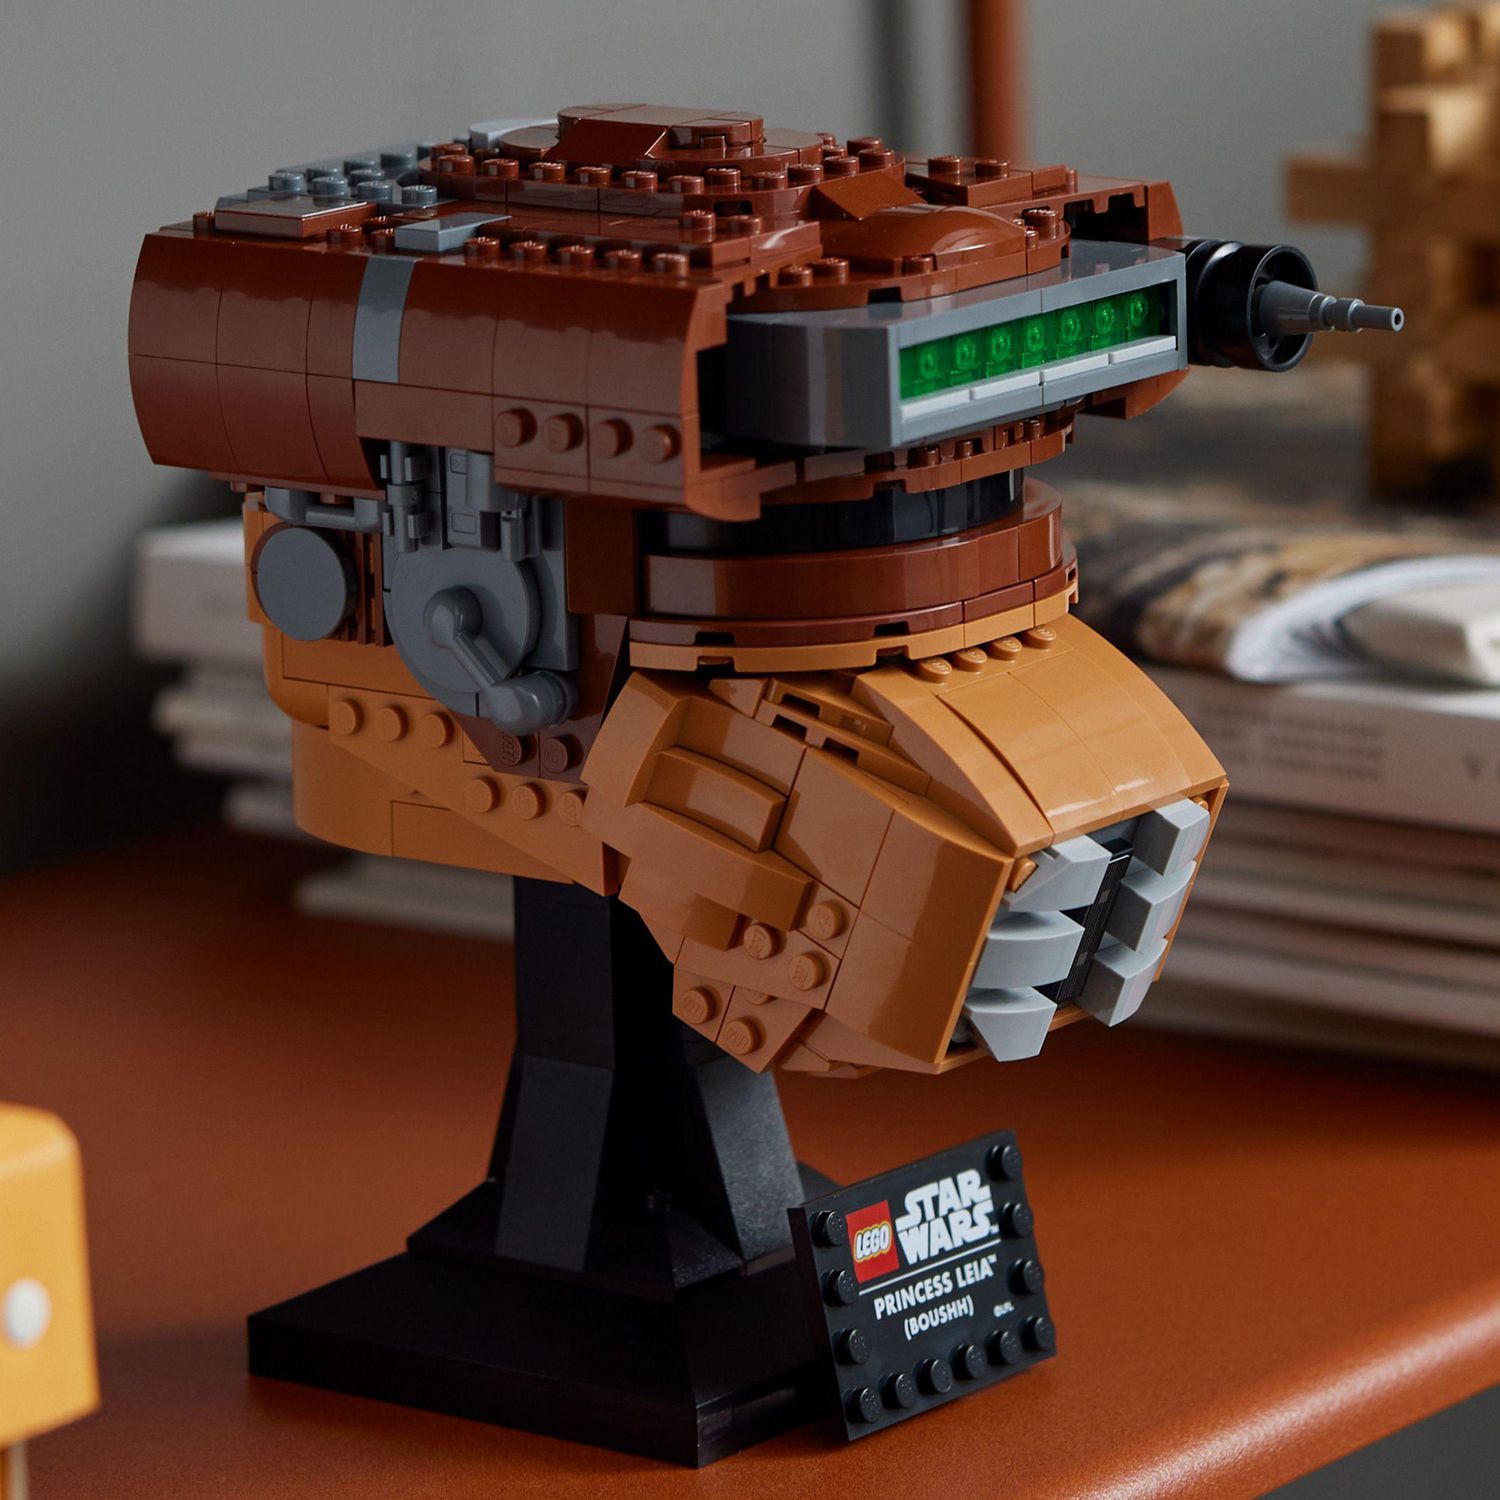 LEGO 75351 Star Wars Princess Leia (Boushh) Helmet Model Building